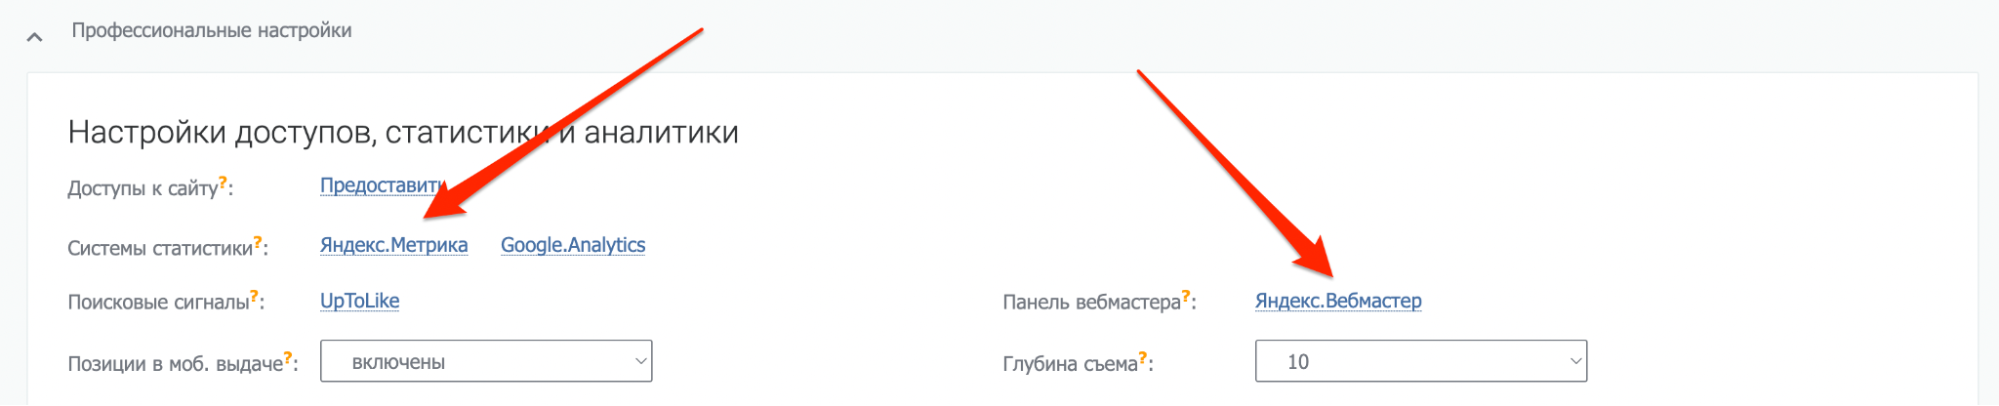 Добавьте SEO-проект, подключите на первом шаге «Яндекс Метрику» и «Яндекс вебмастер»